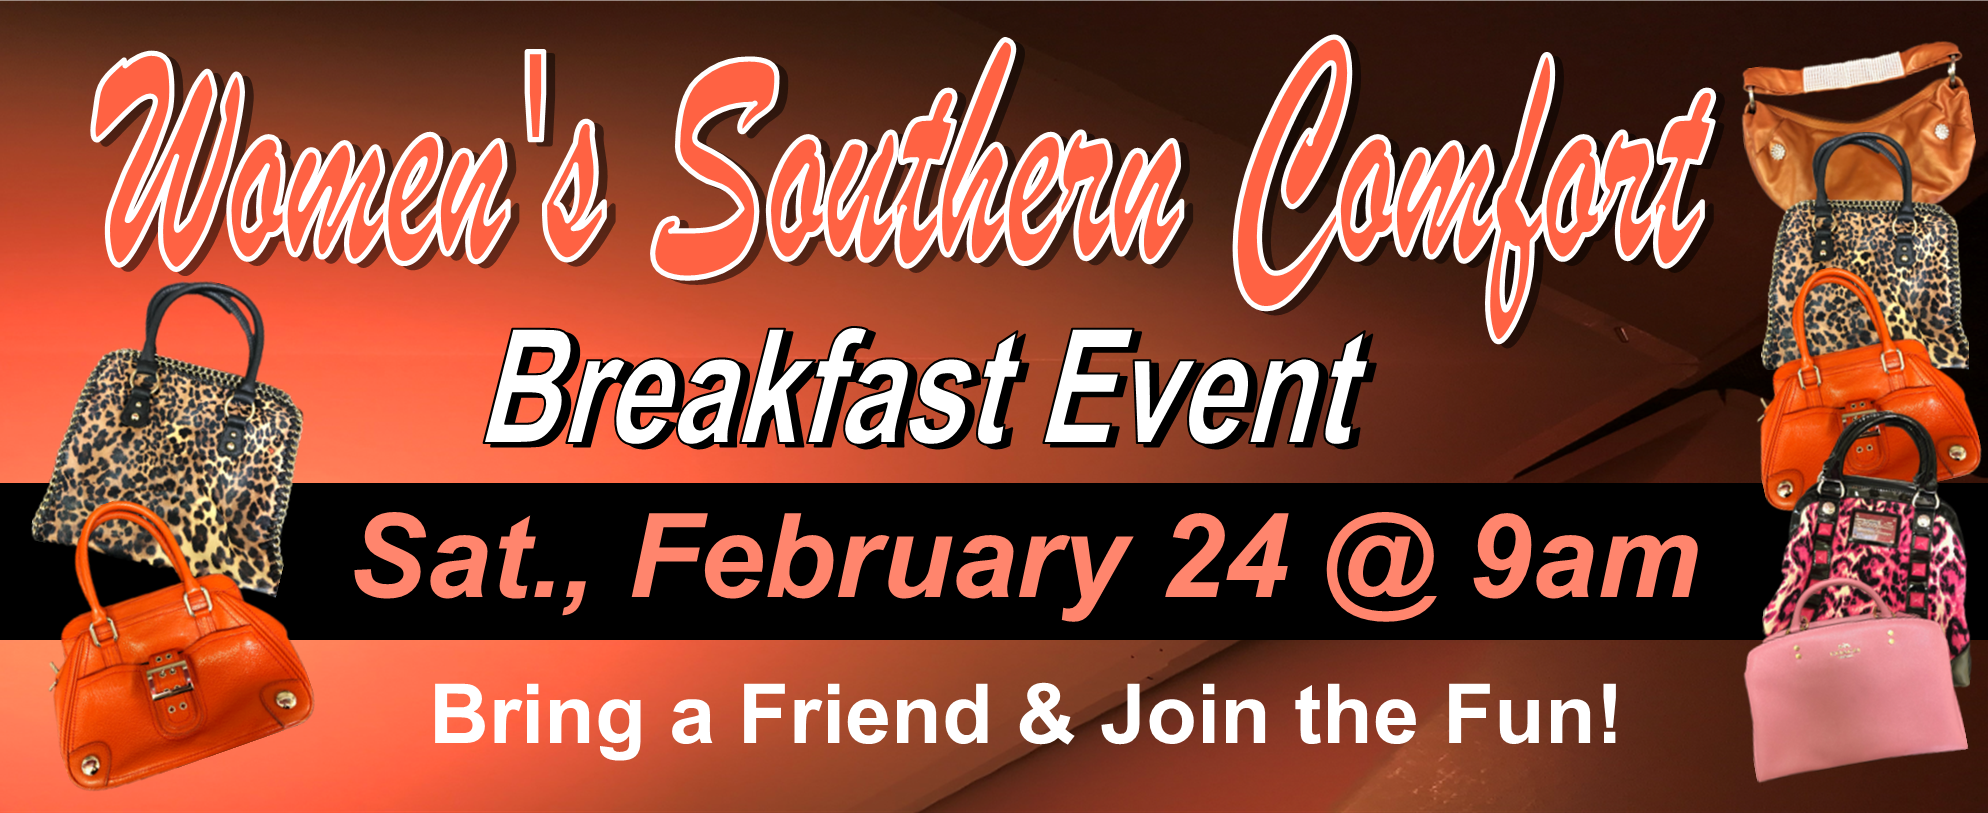 Wonen's Southern Comfort Breakfast Event Web Bannerr